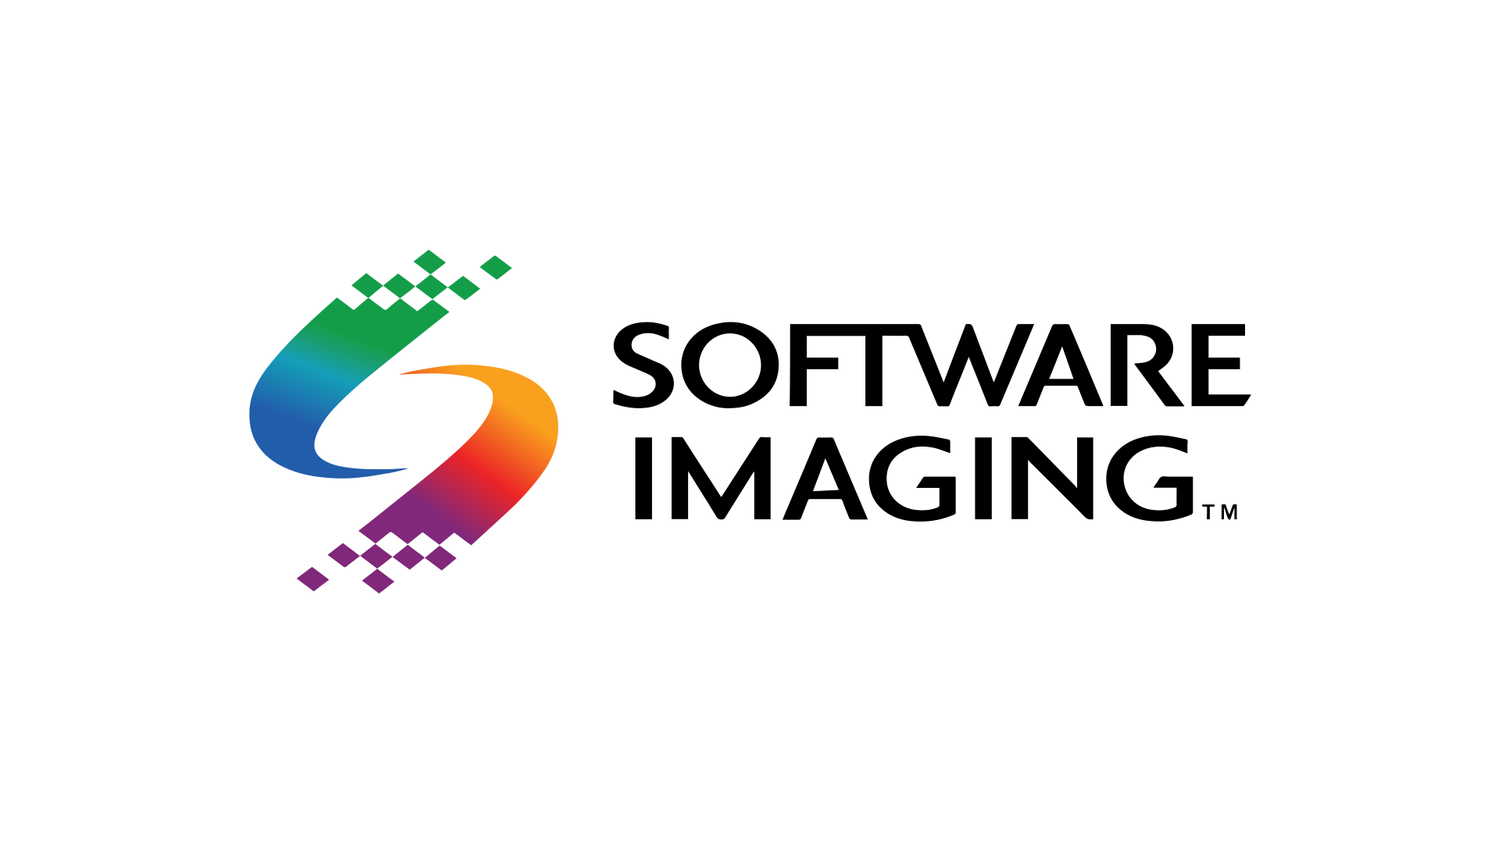 Software Imaging Ltd